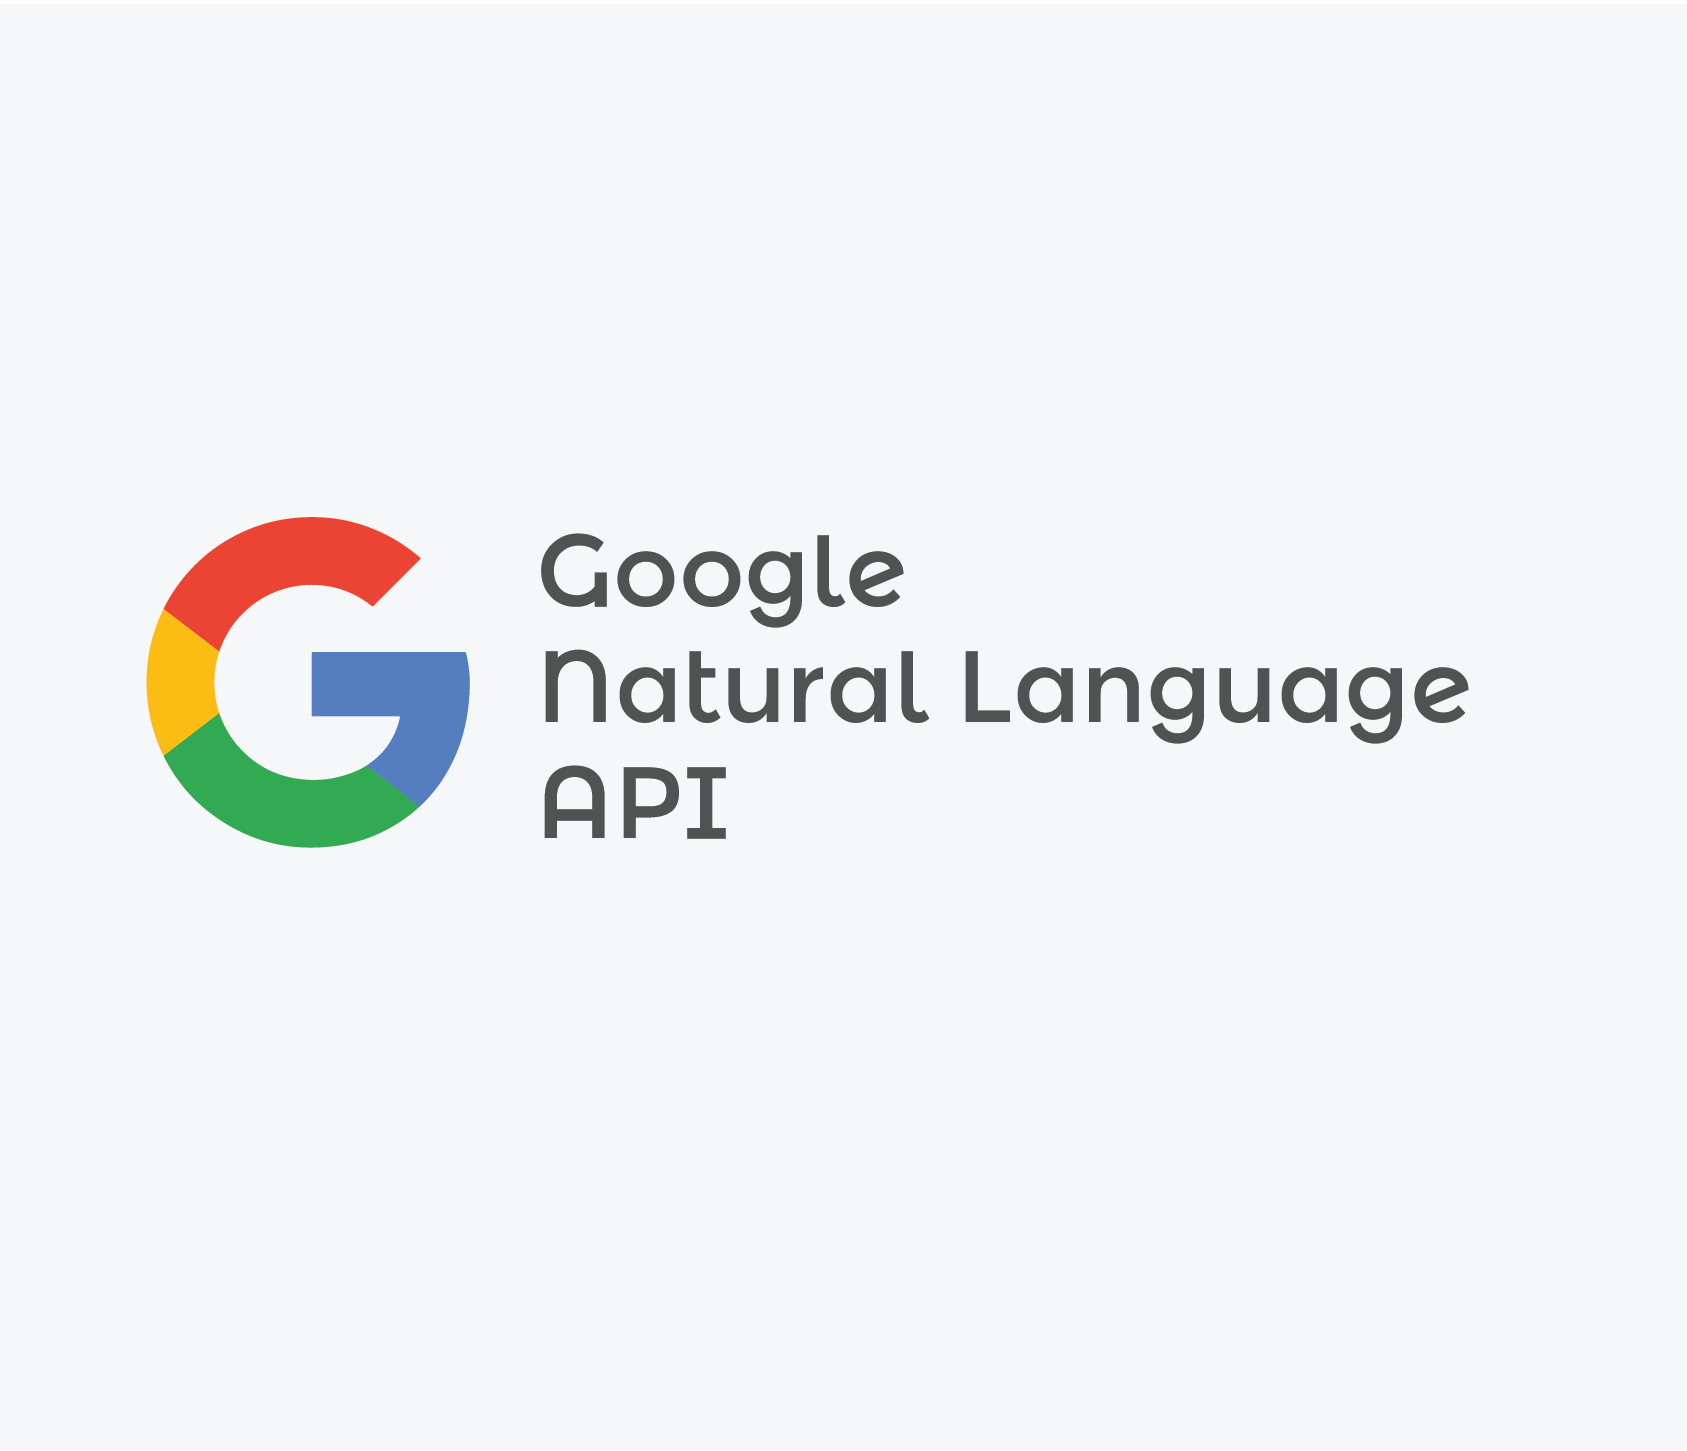 Google API Logo - Google Natural Language API